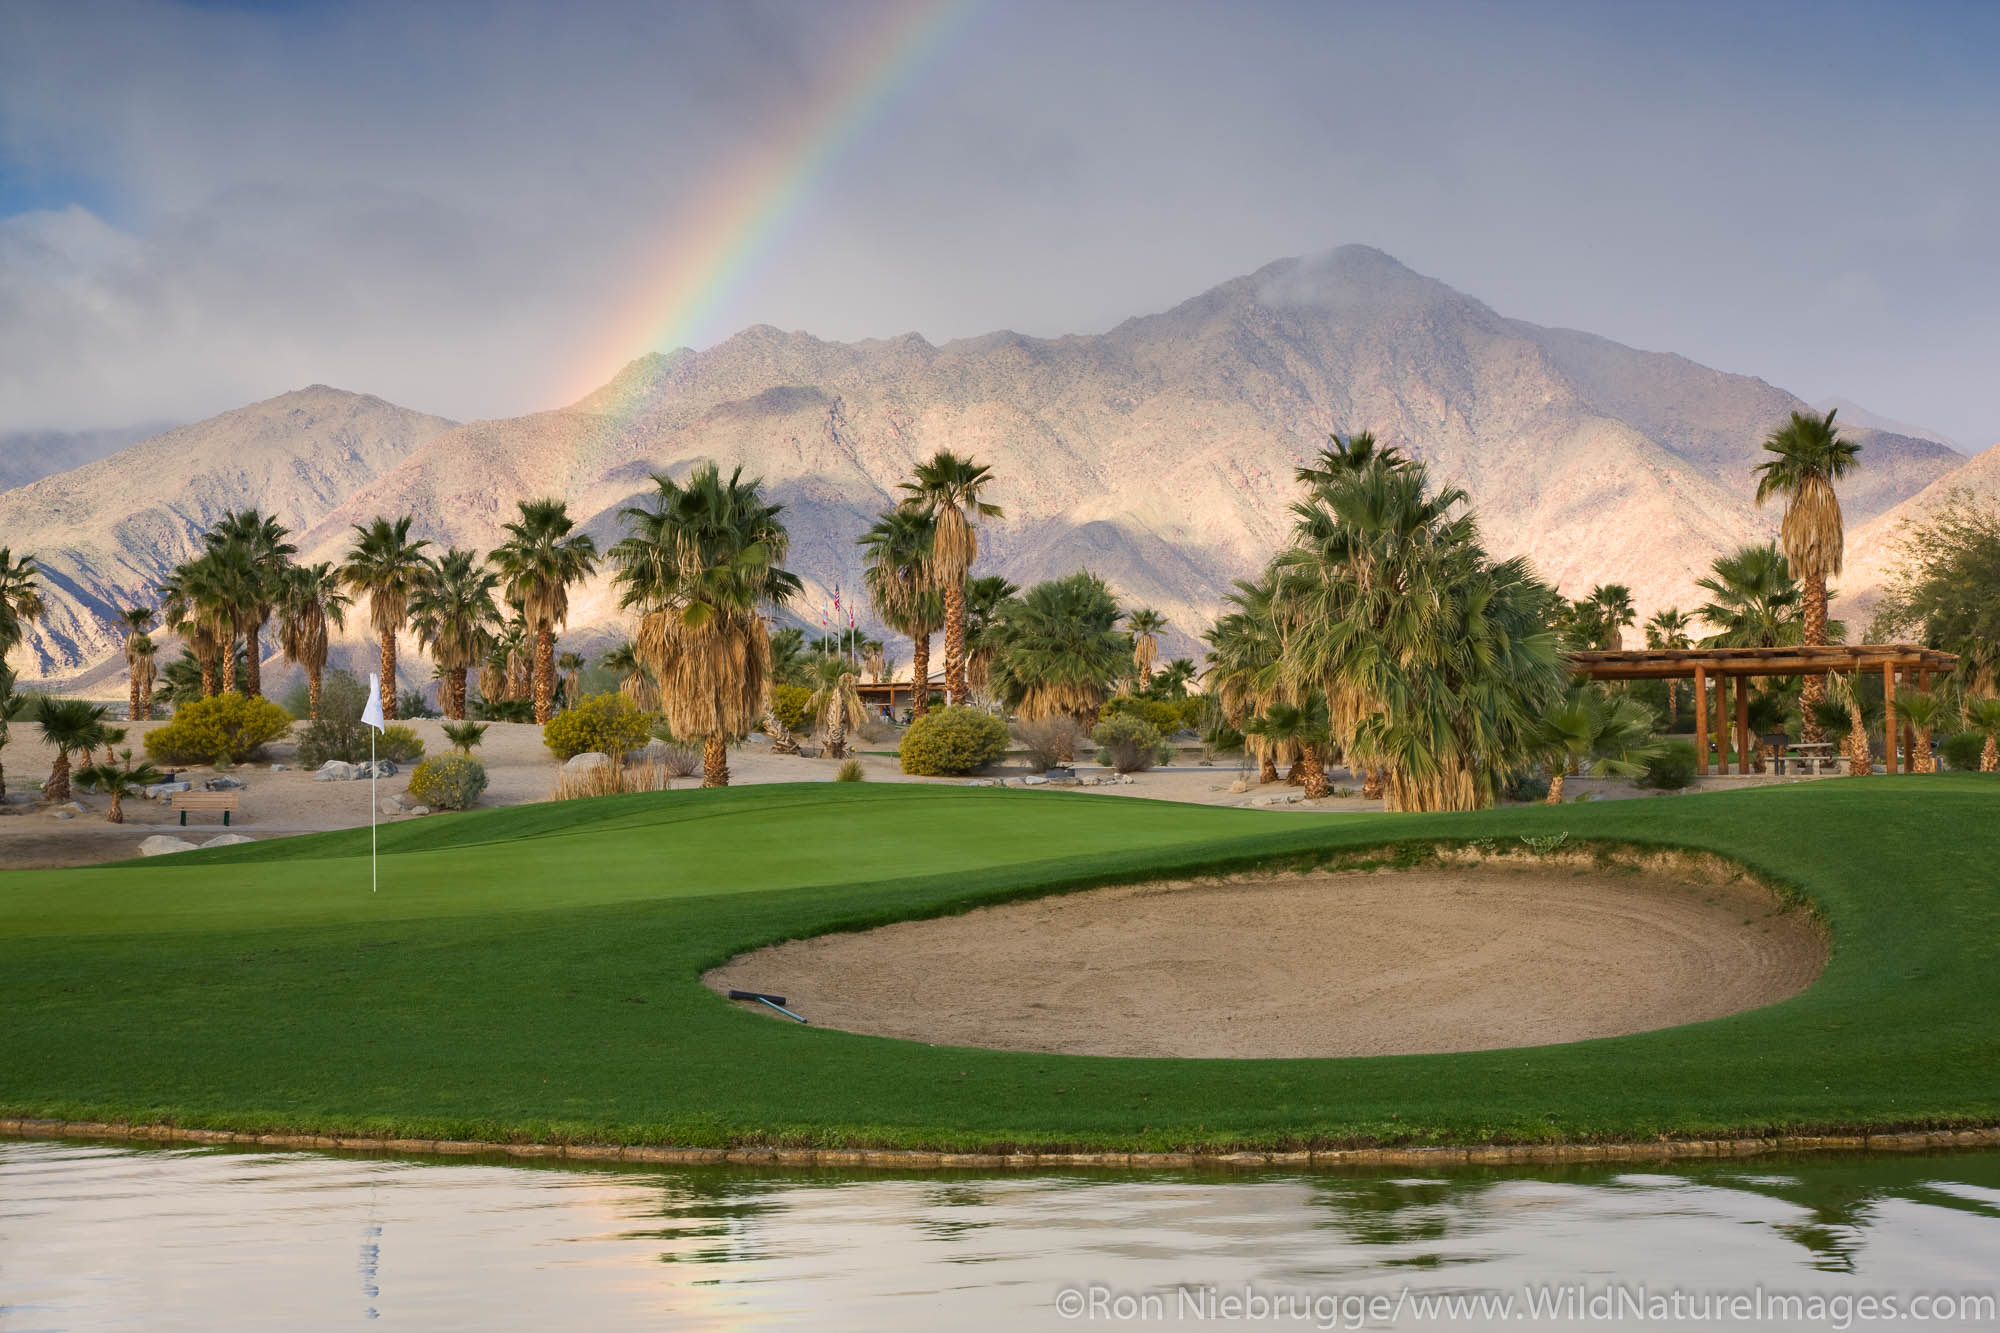 A rainbow at The Springs at Borrego RV Resort and Golf Course, Borrego Springs, California.